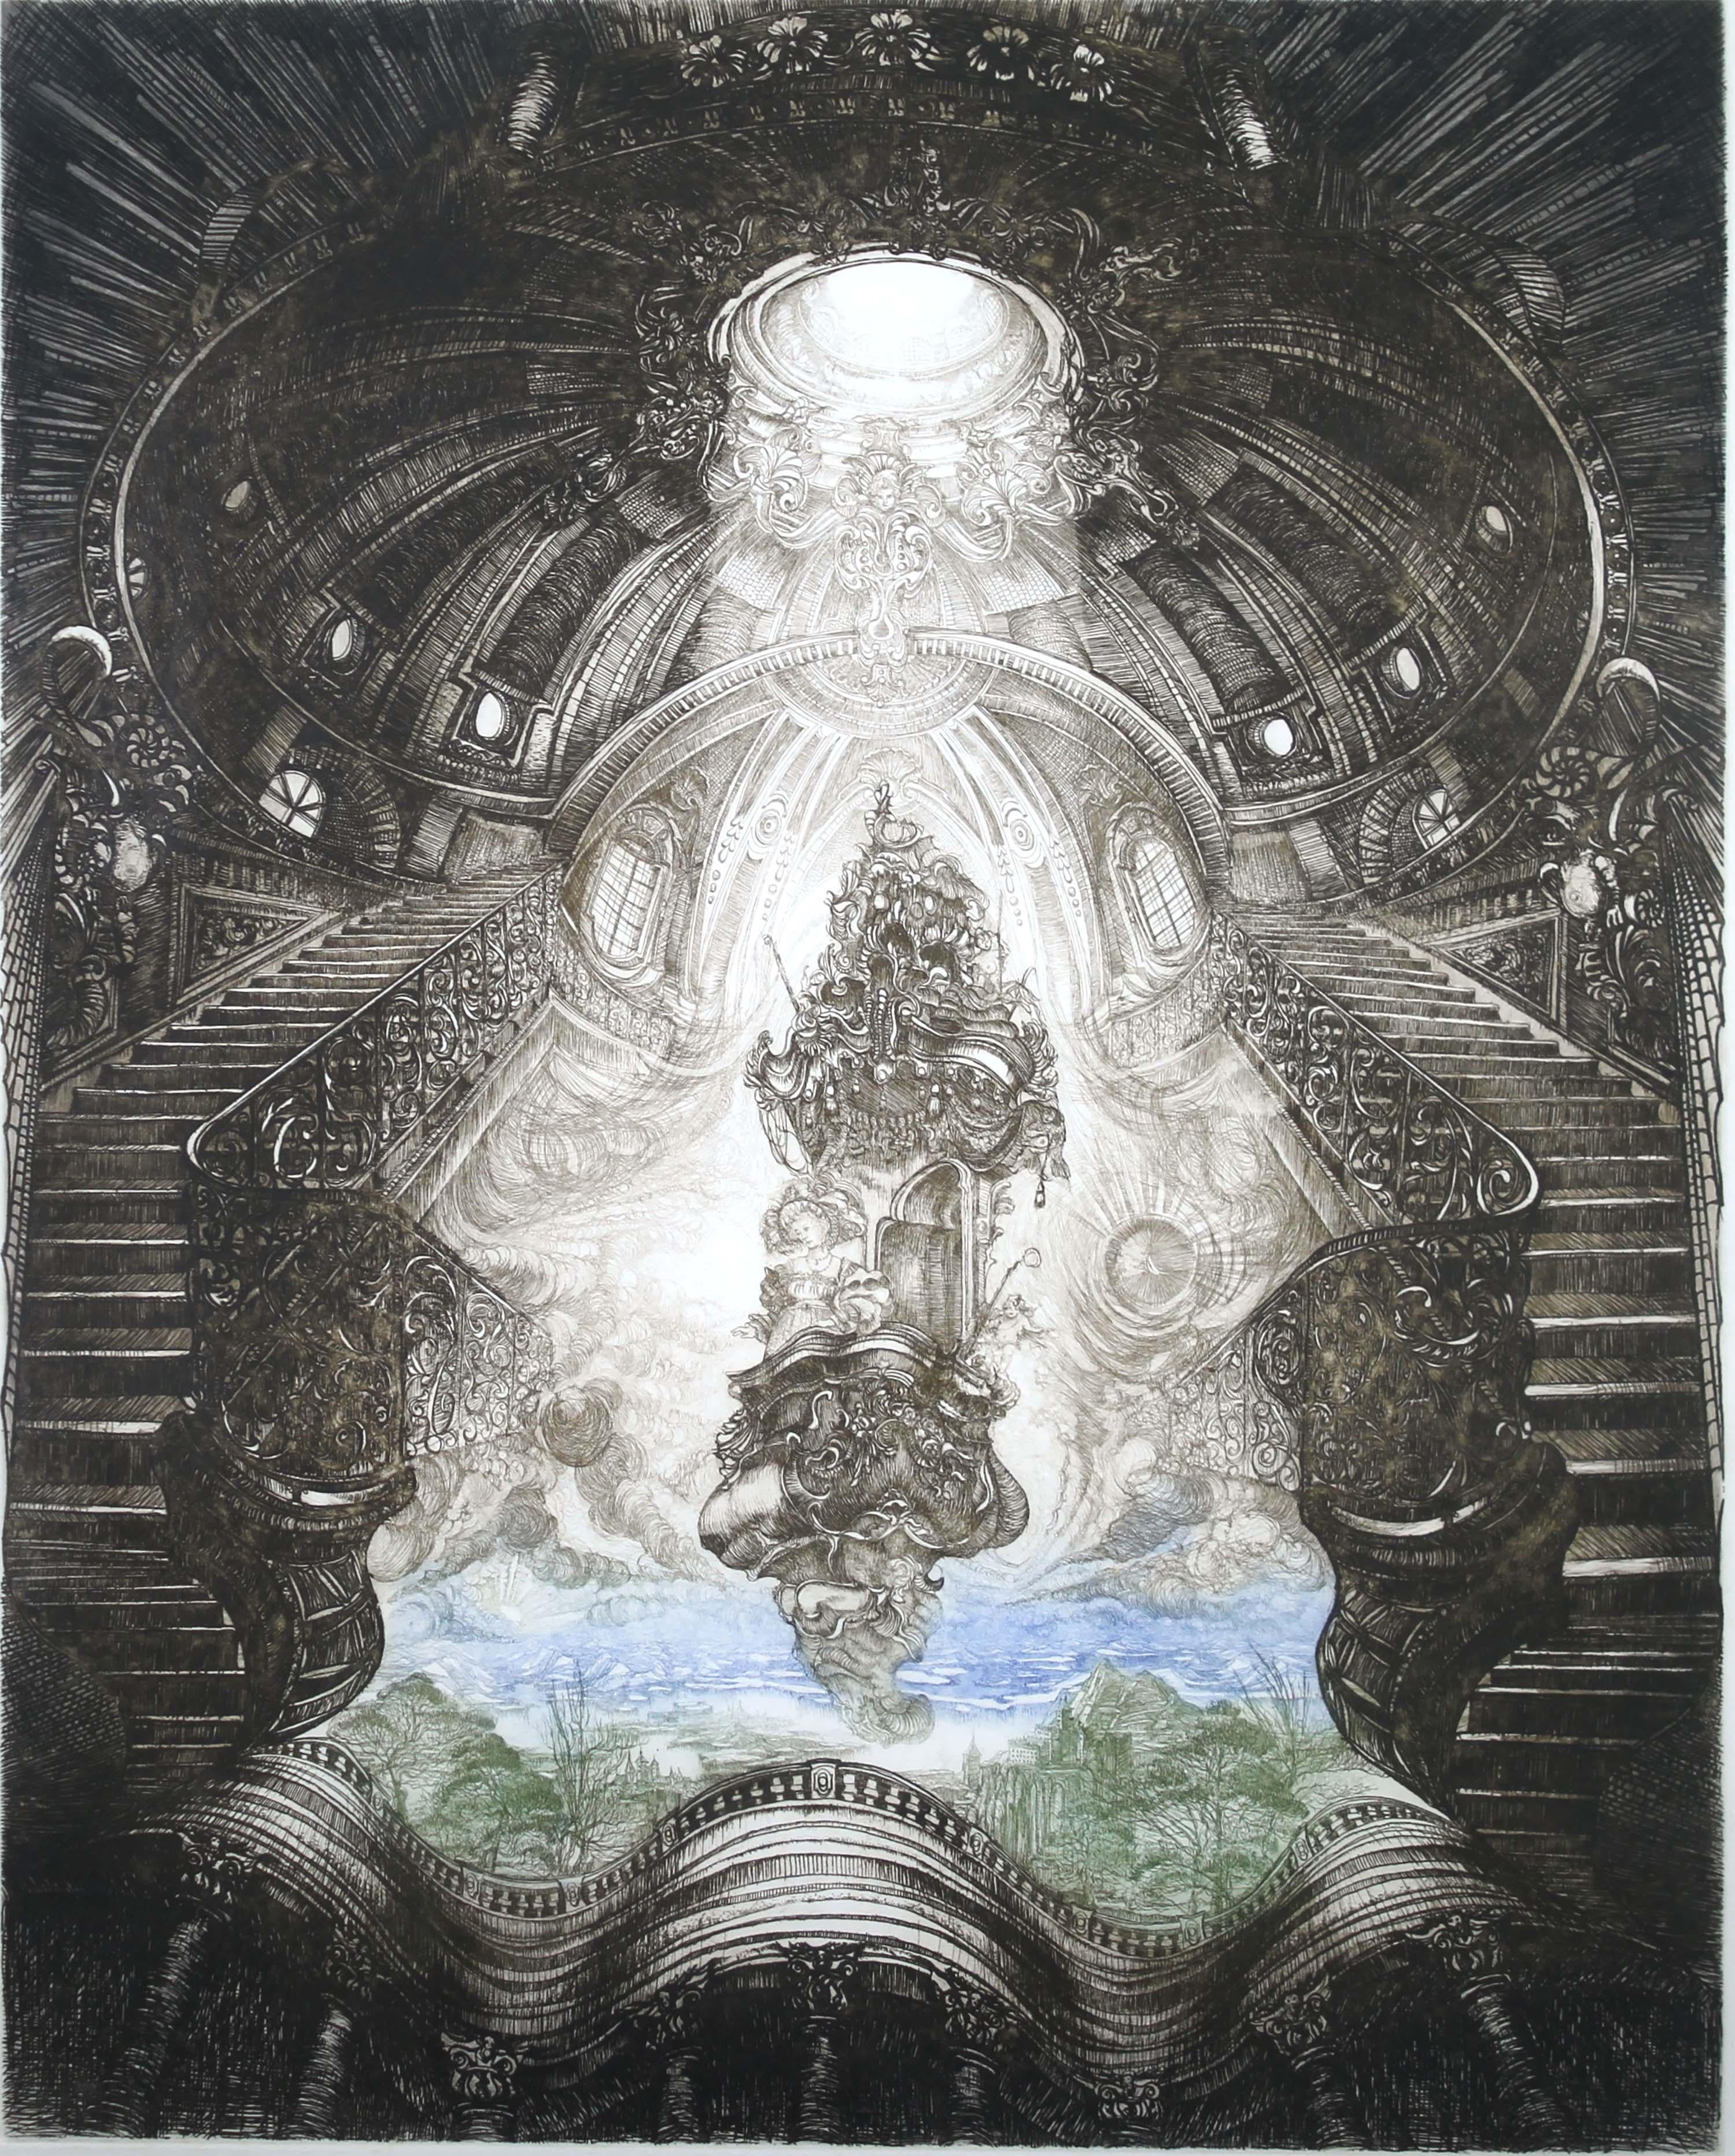 A baroque meets surreal color aquatint etching on paper titled 